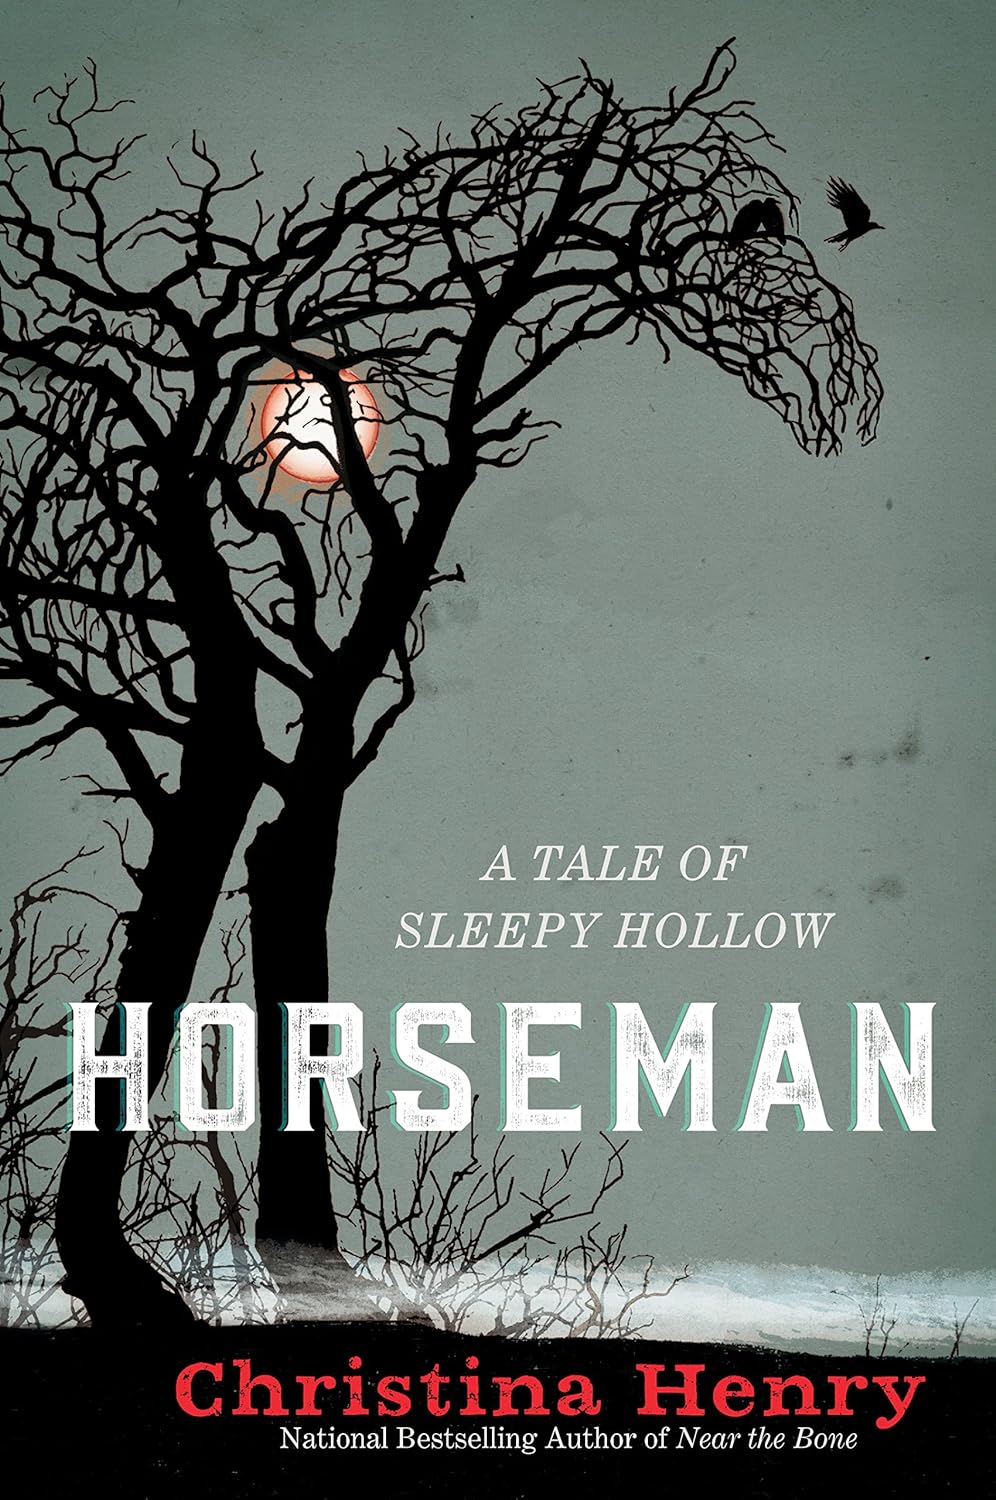 HORSEMAN: A TALE OF SLEEPY HOLLY by Christina Henry